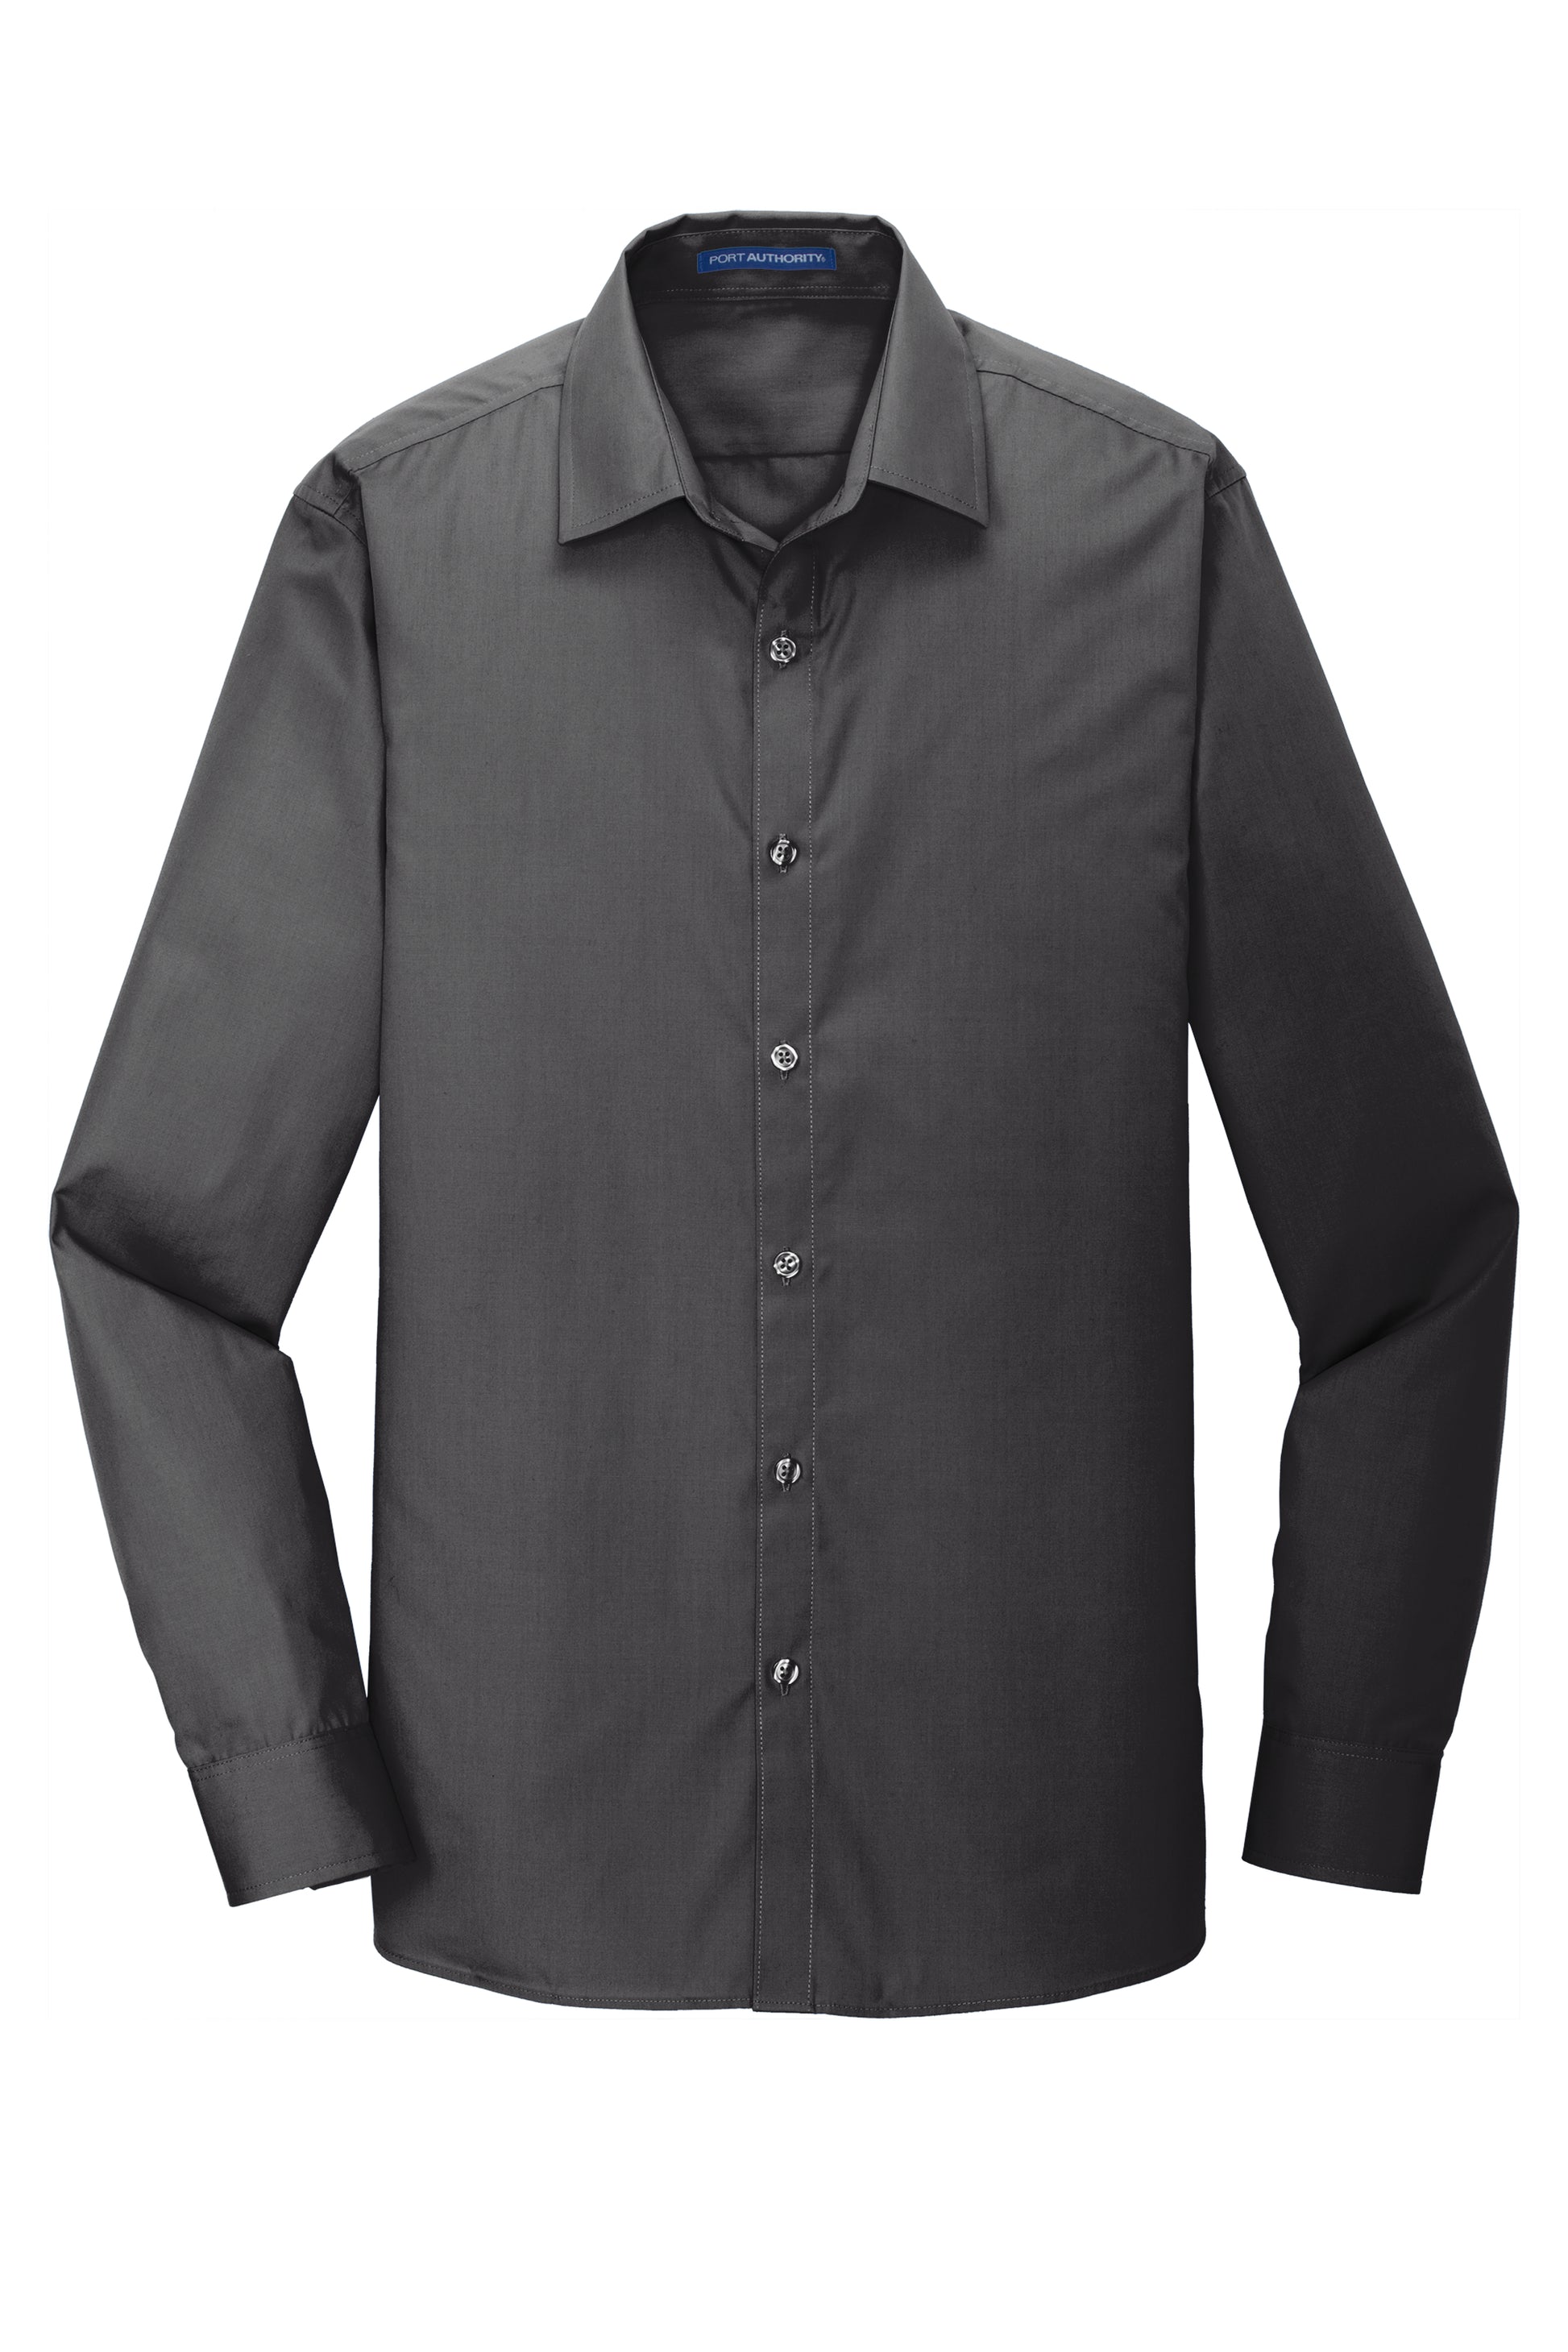 port authority slim fit long sleeve carefree poplin shirt graphite grey